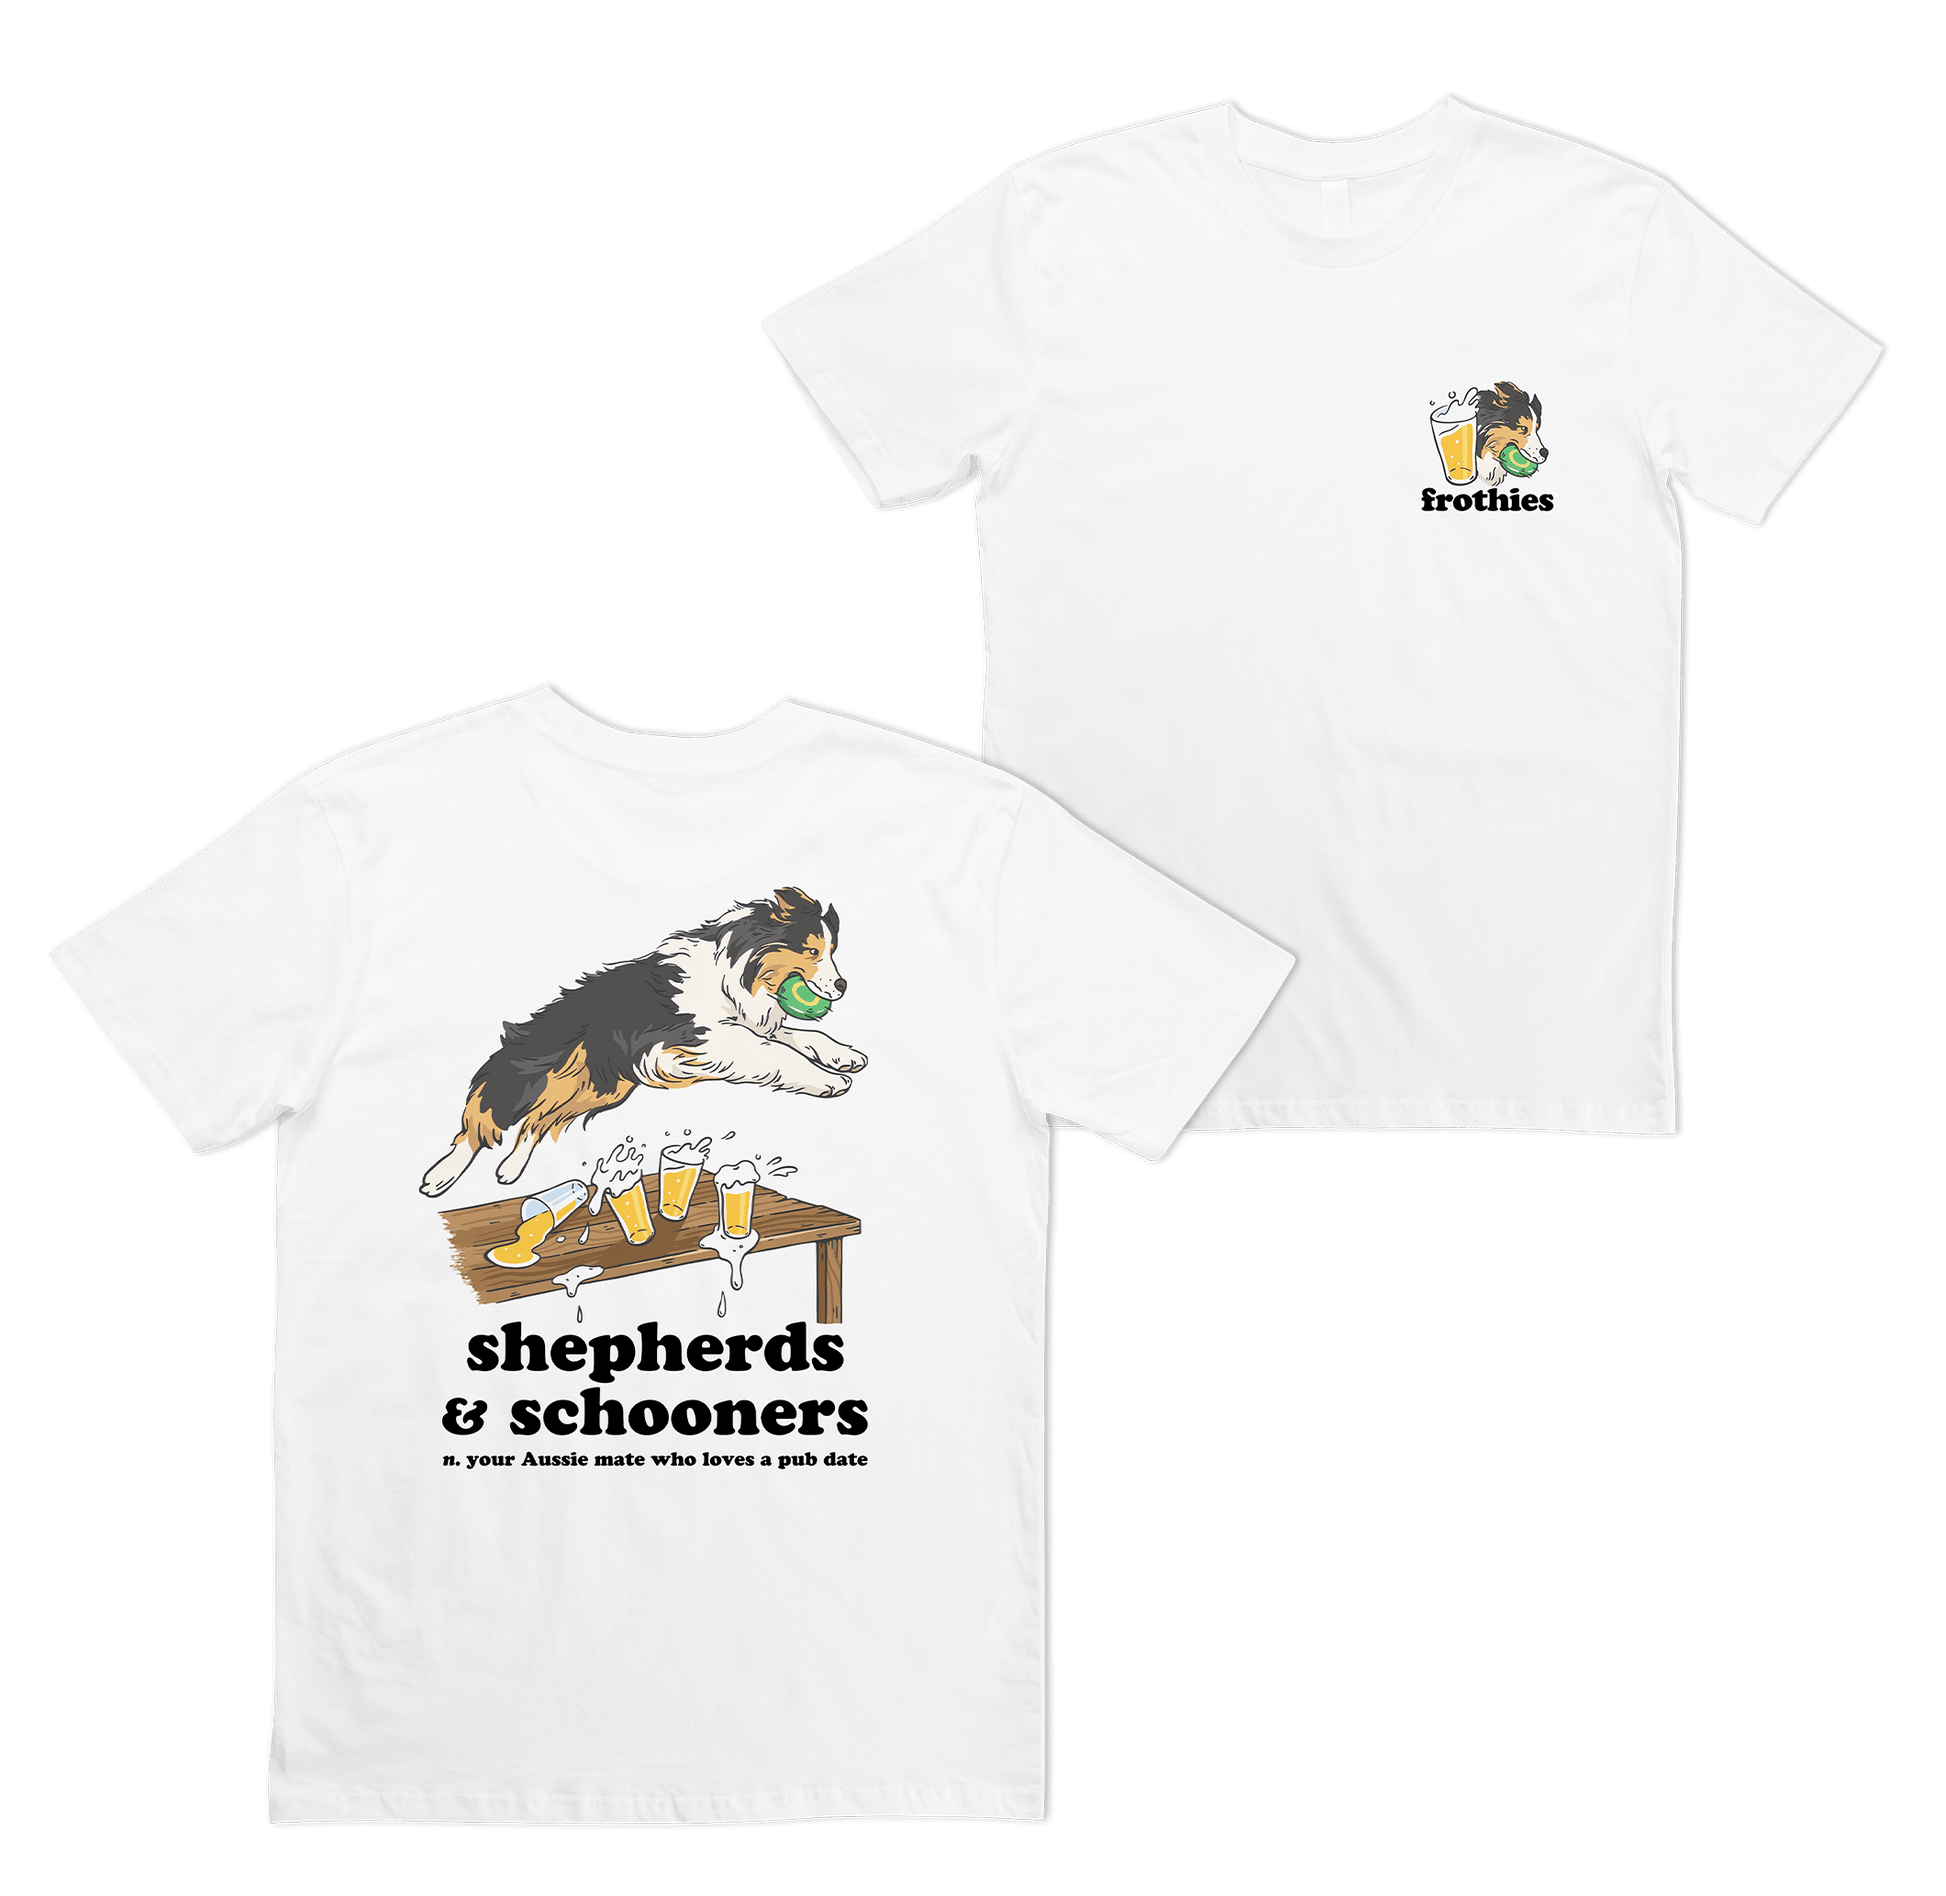 Shepherds & Schooners Tee White T-Shirt Frothies